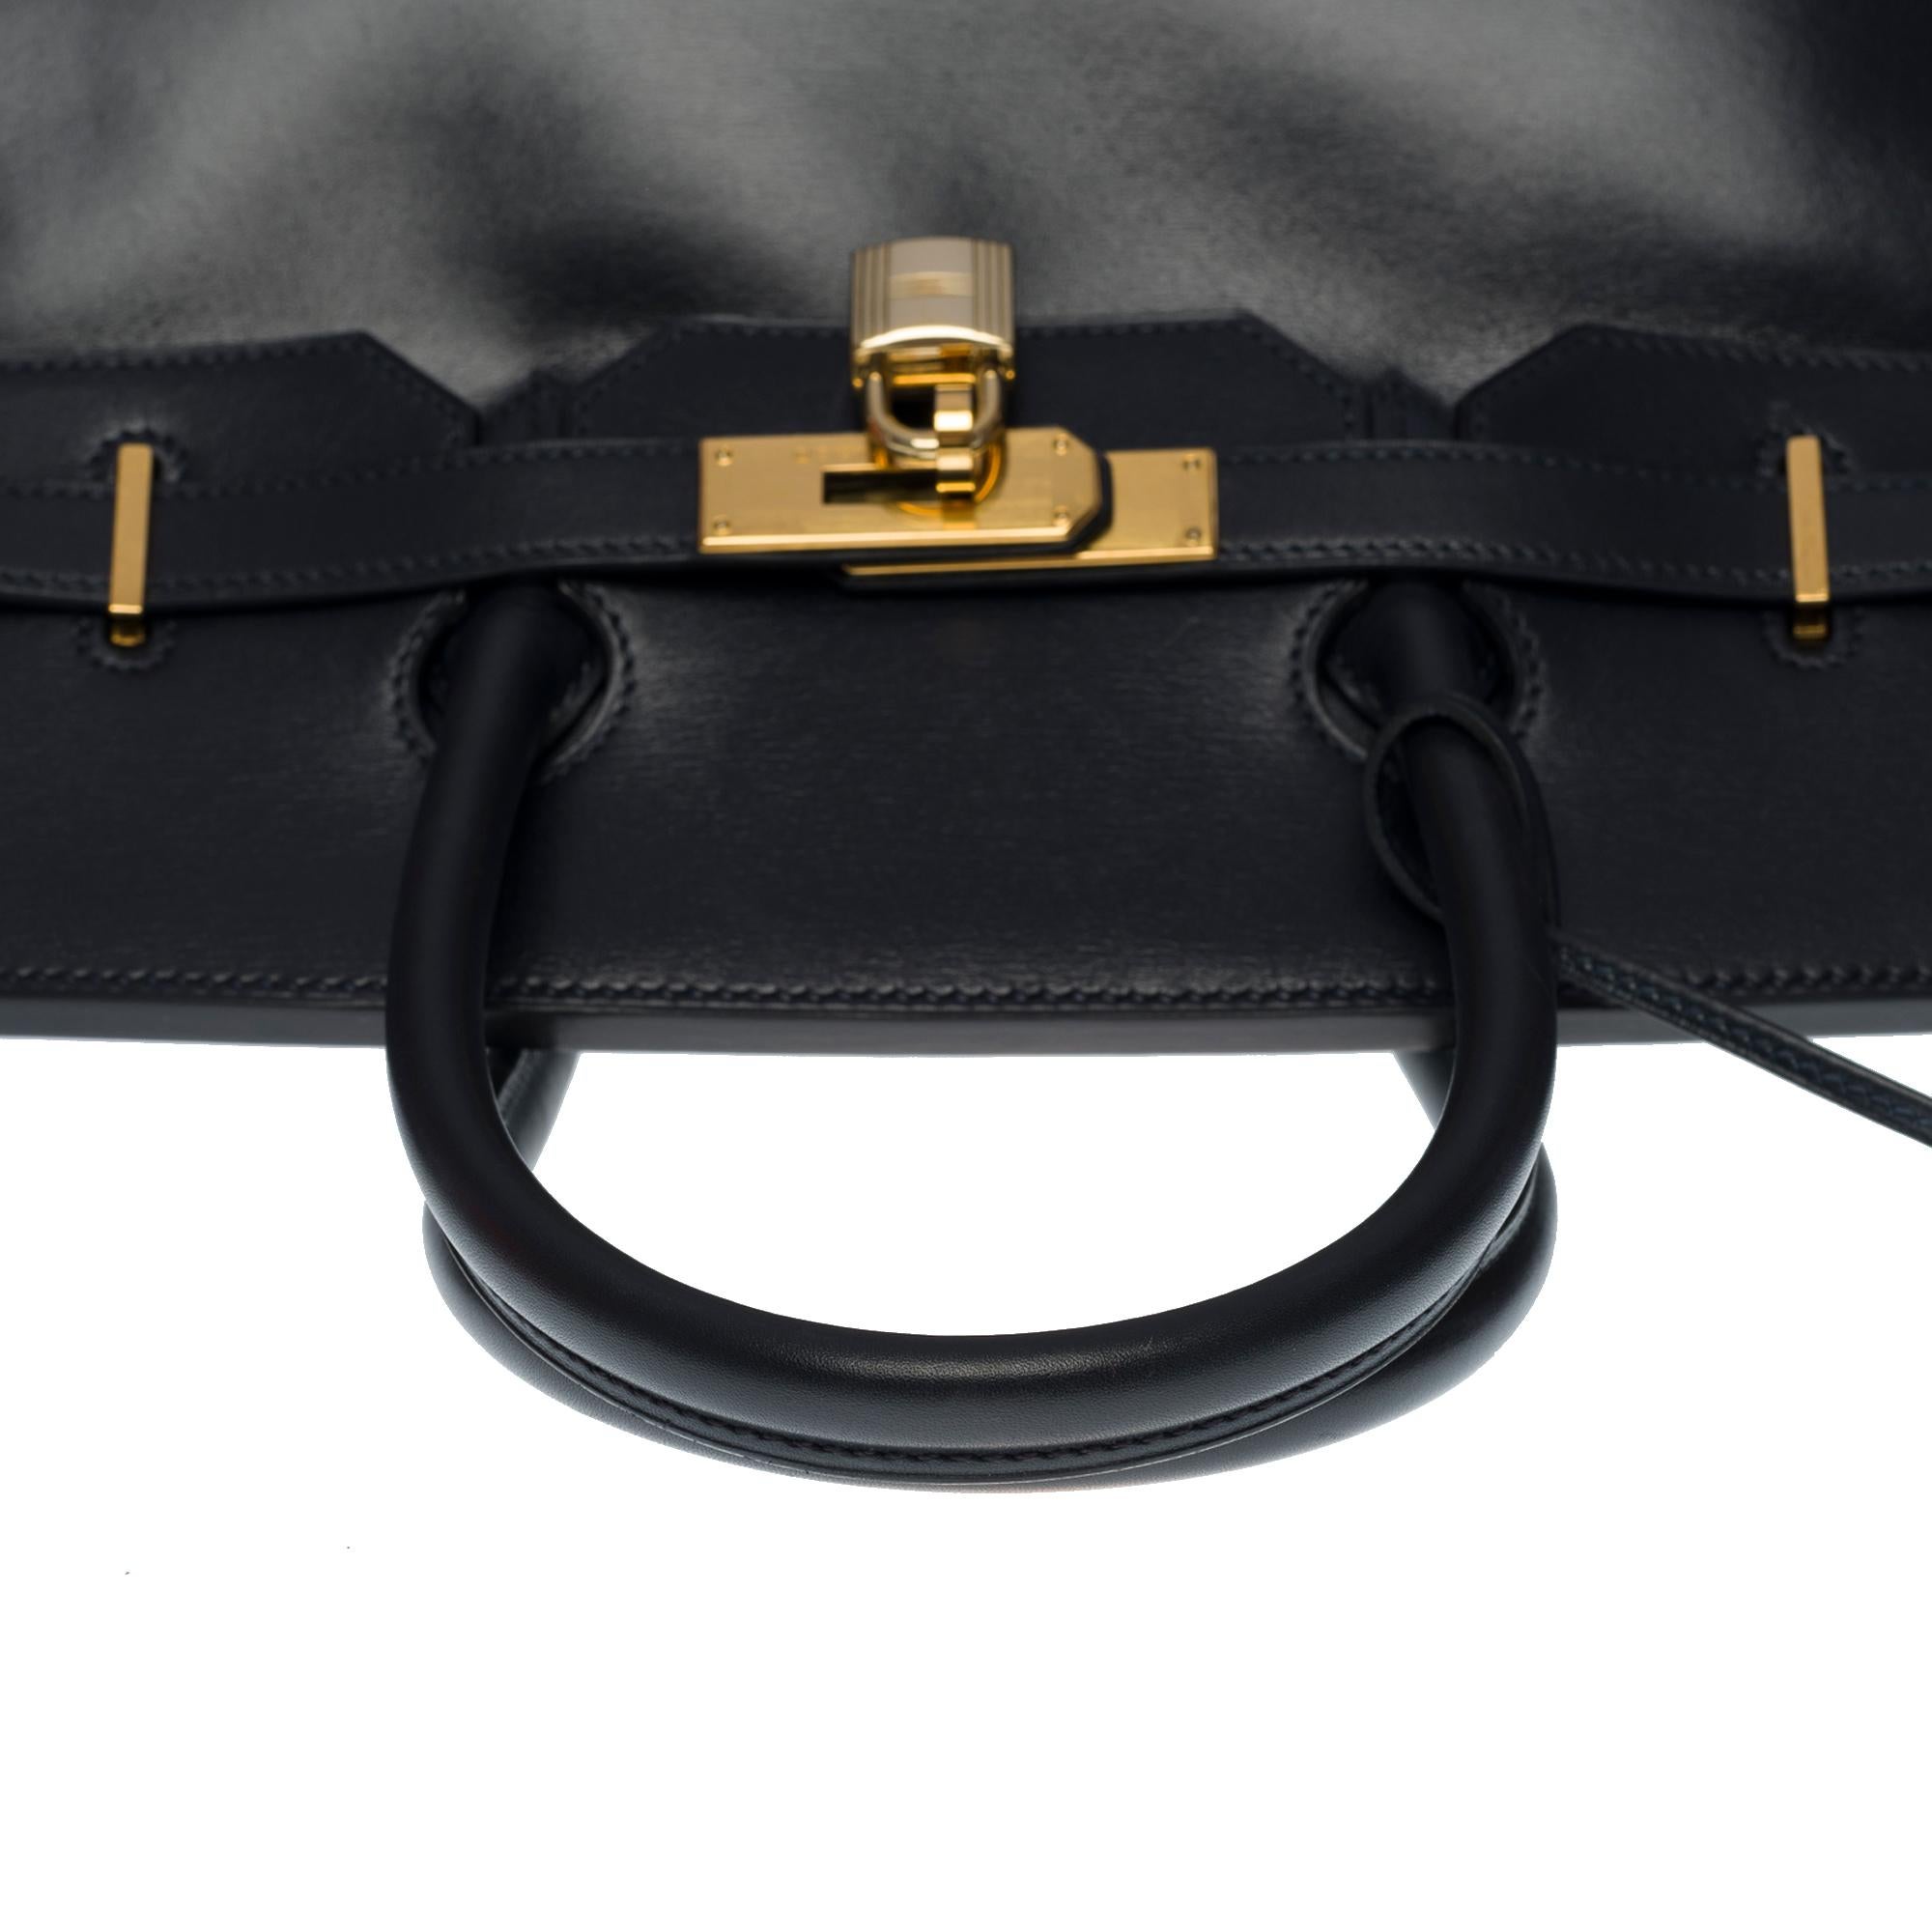 Amazing & Rare Hermès Birkin 35 handbag in Blue indigo box calfskin leather, GHW 4